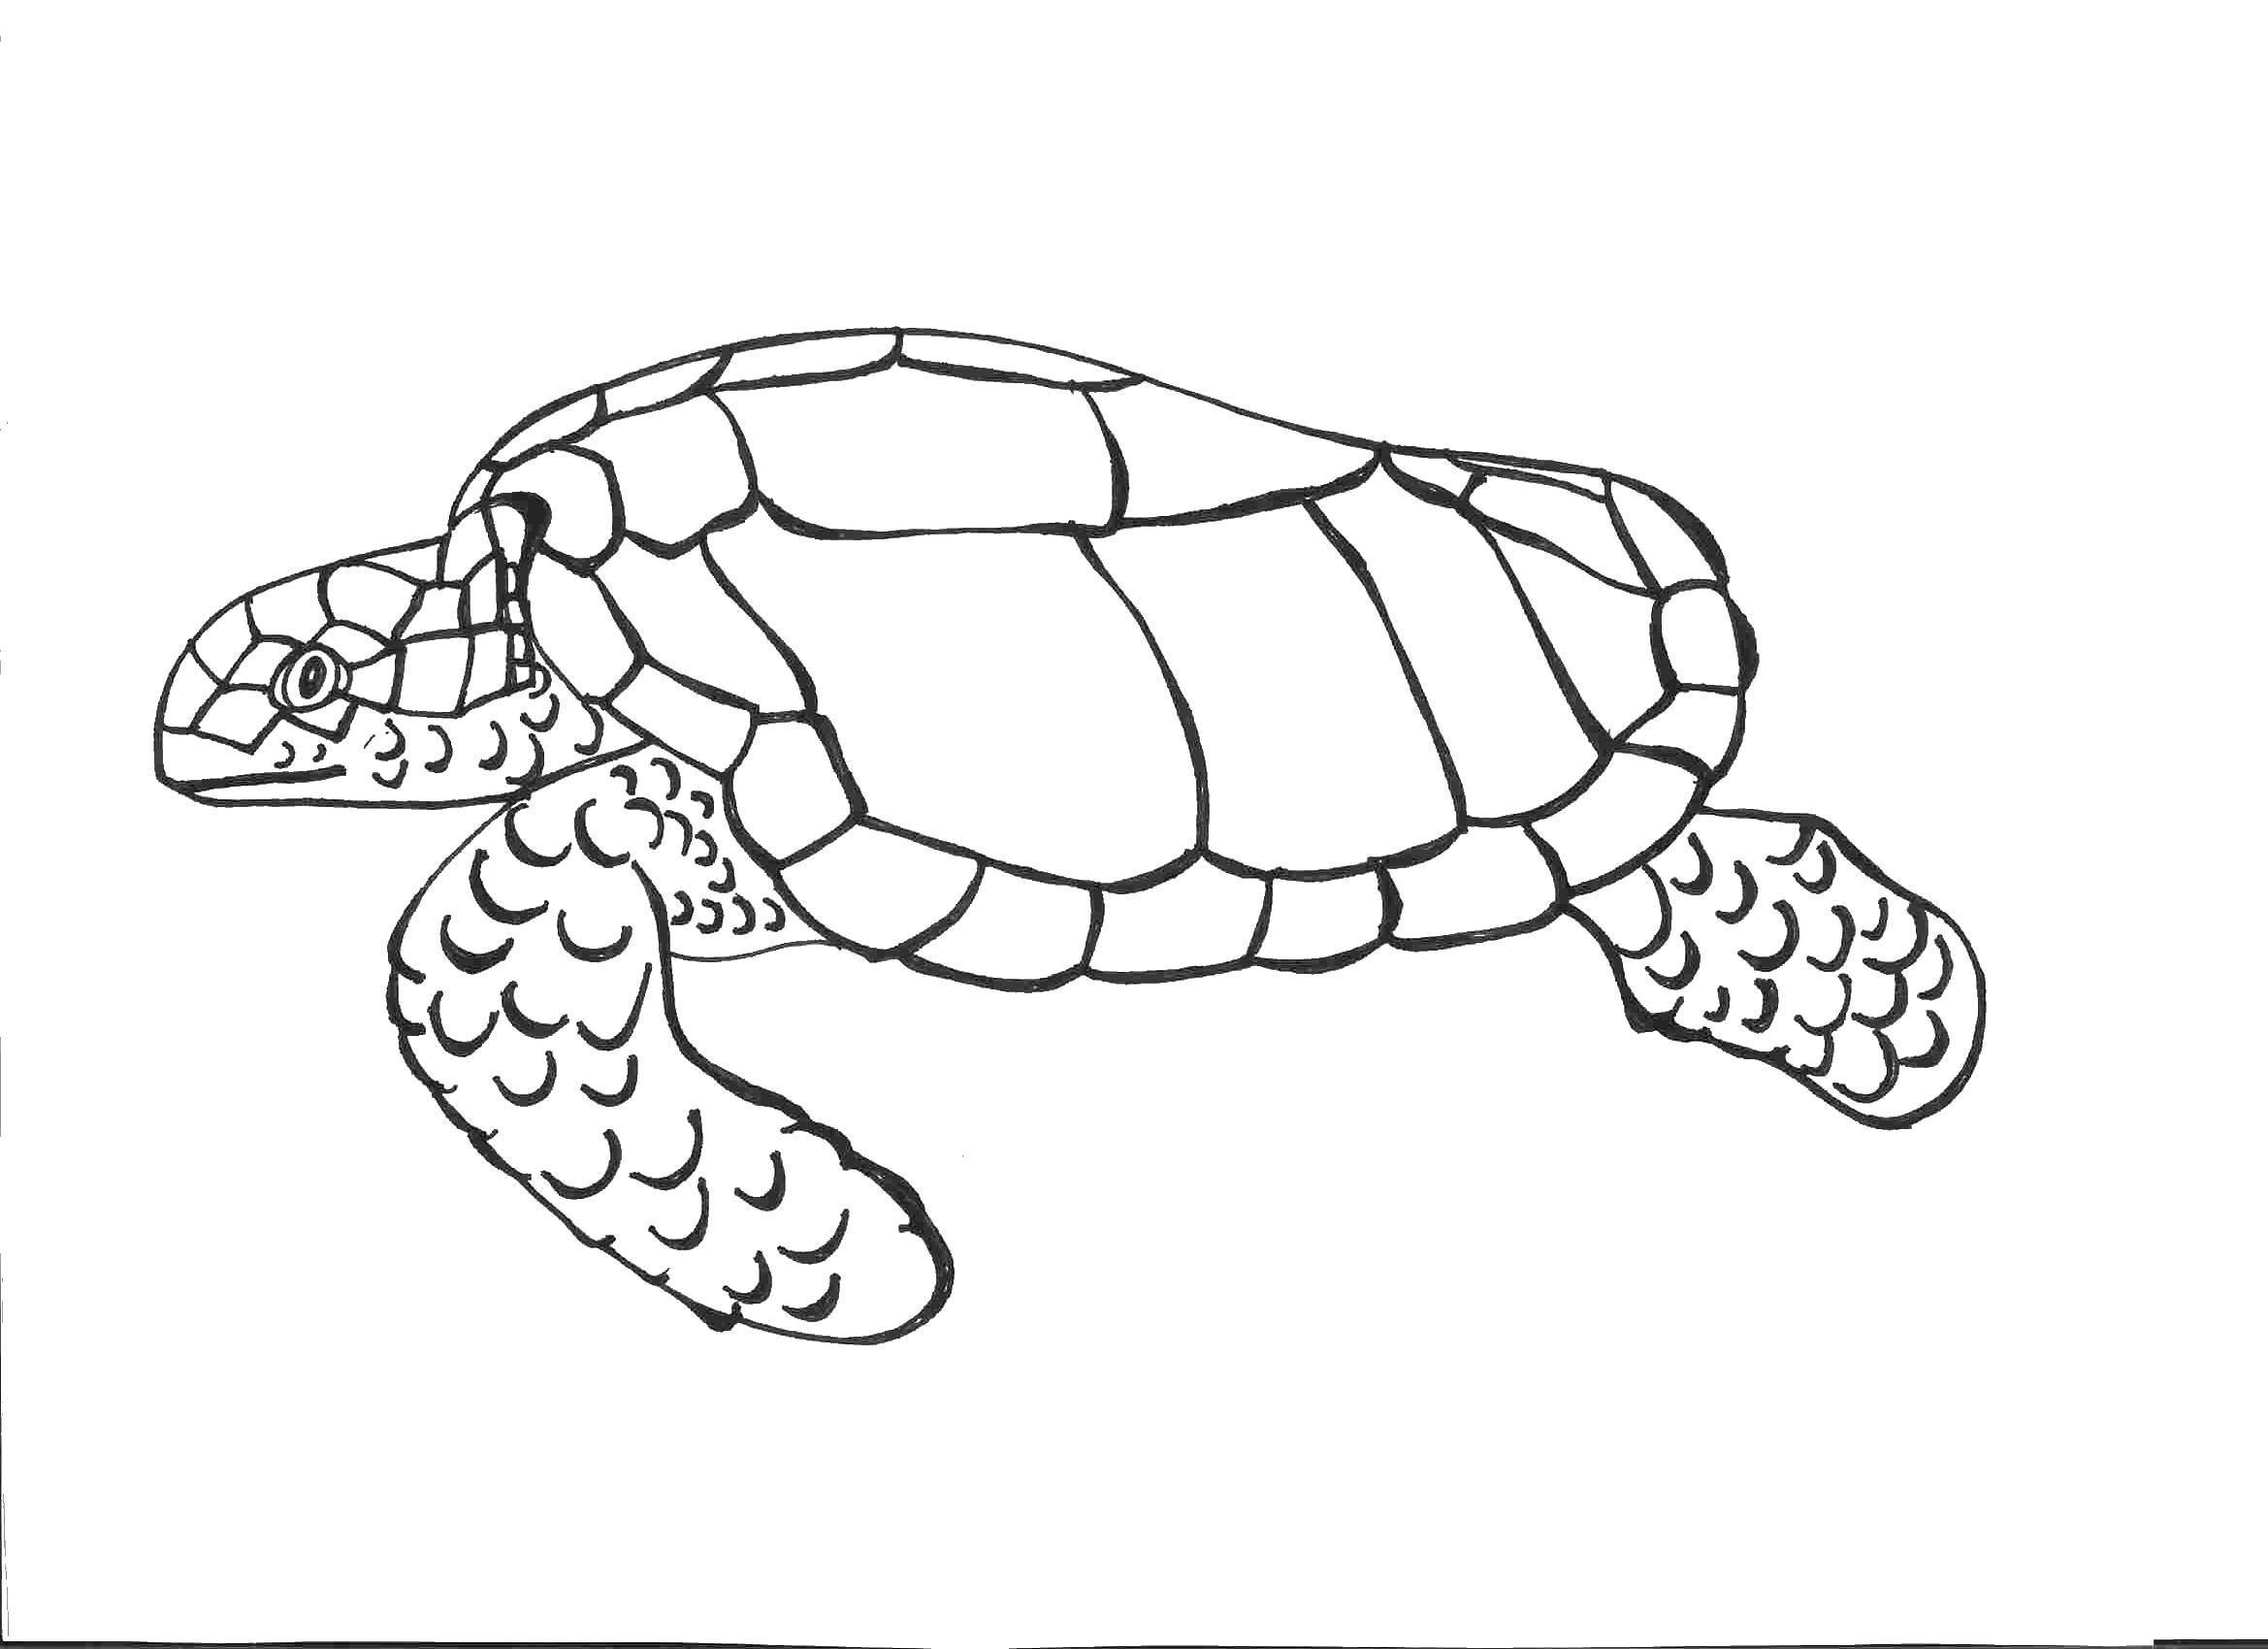   Старая морская черепаха